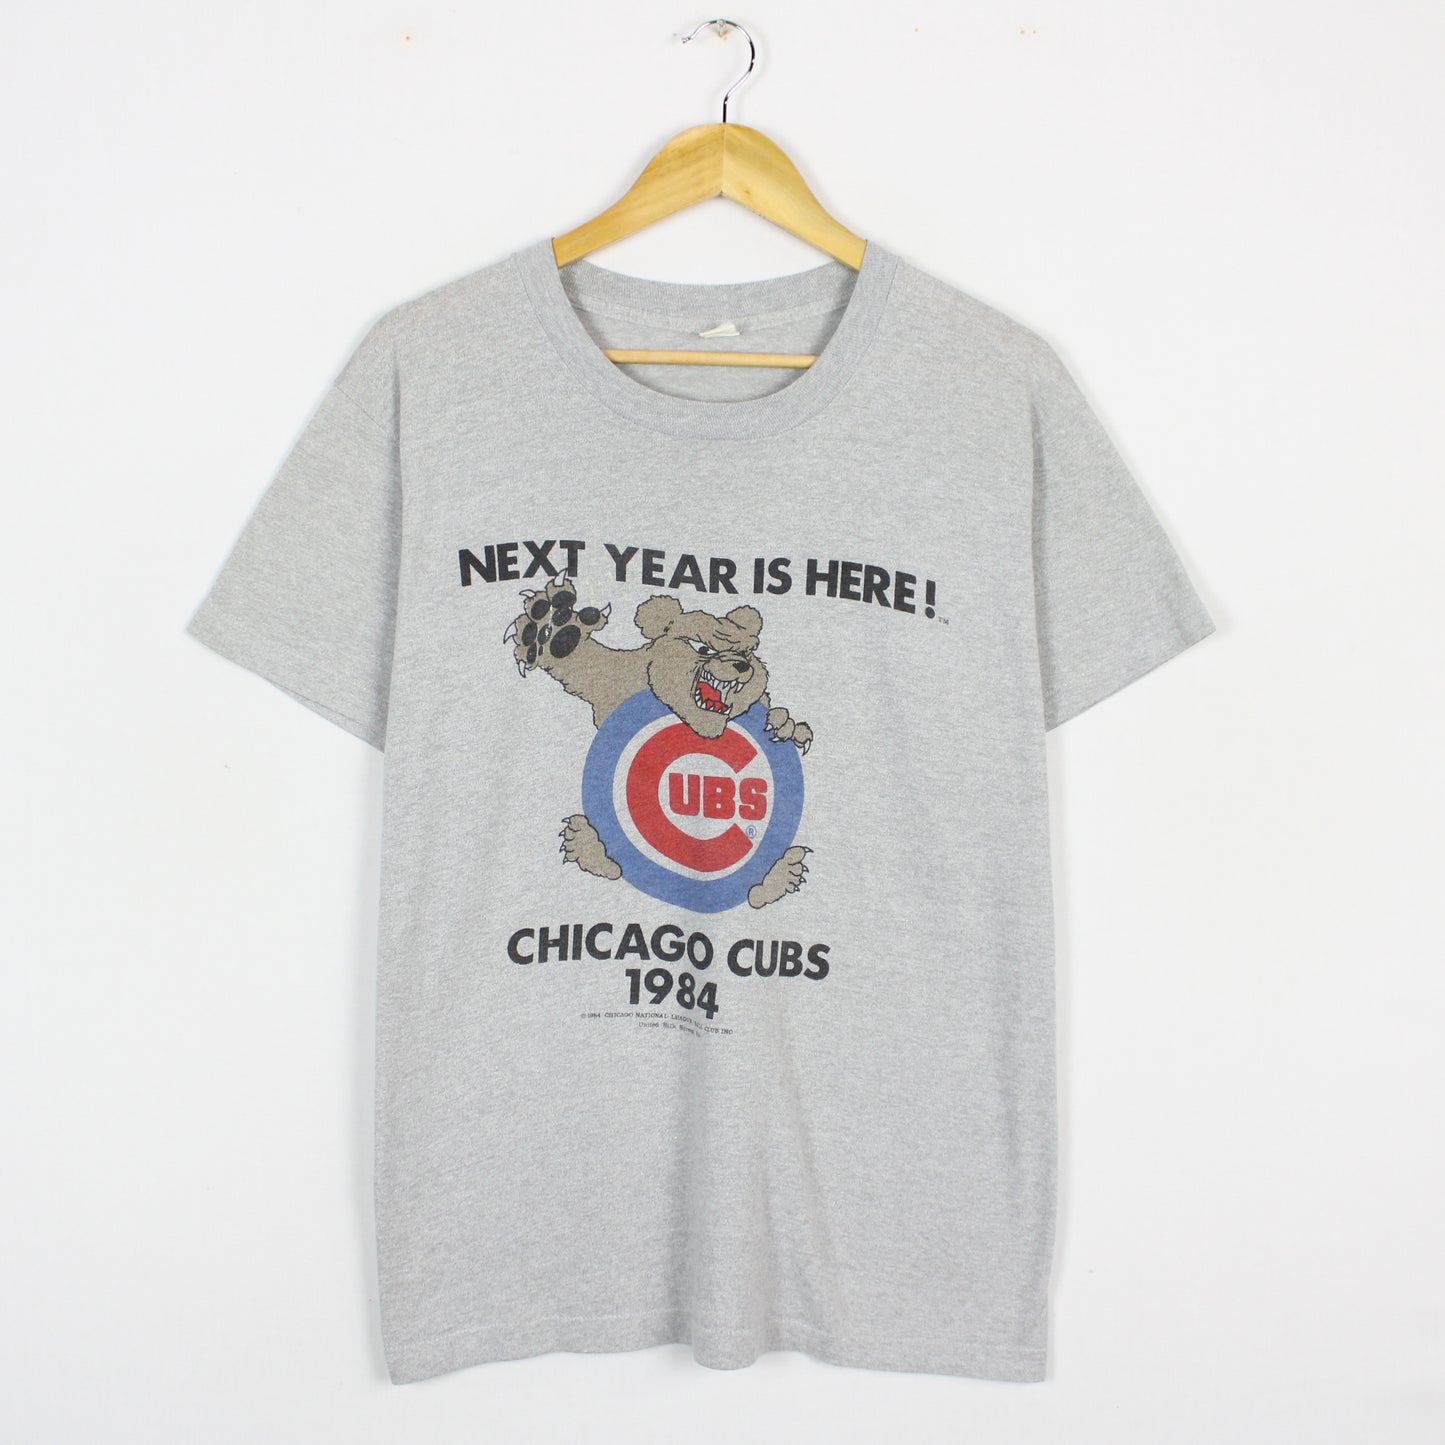 Vintage 1984 Chicago Cubs MLB Tee - M